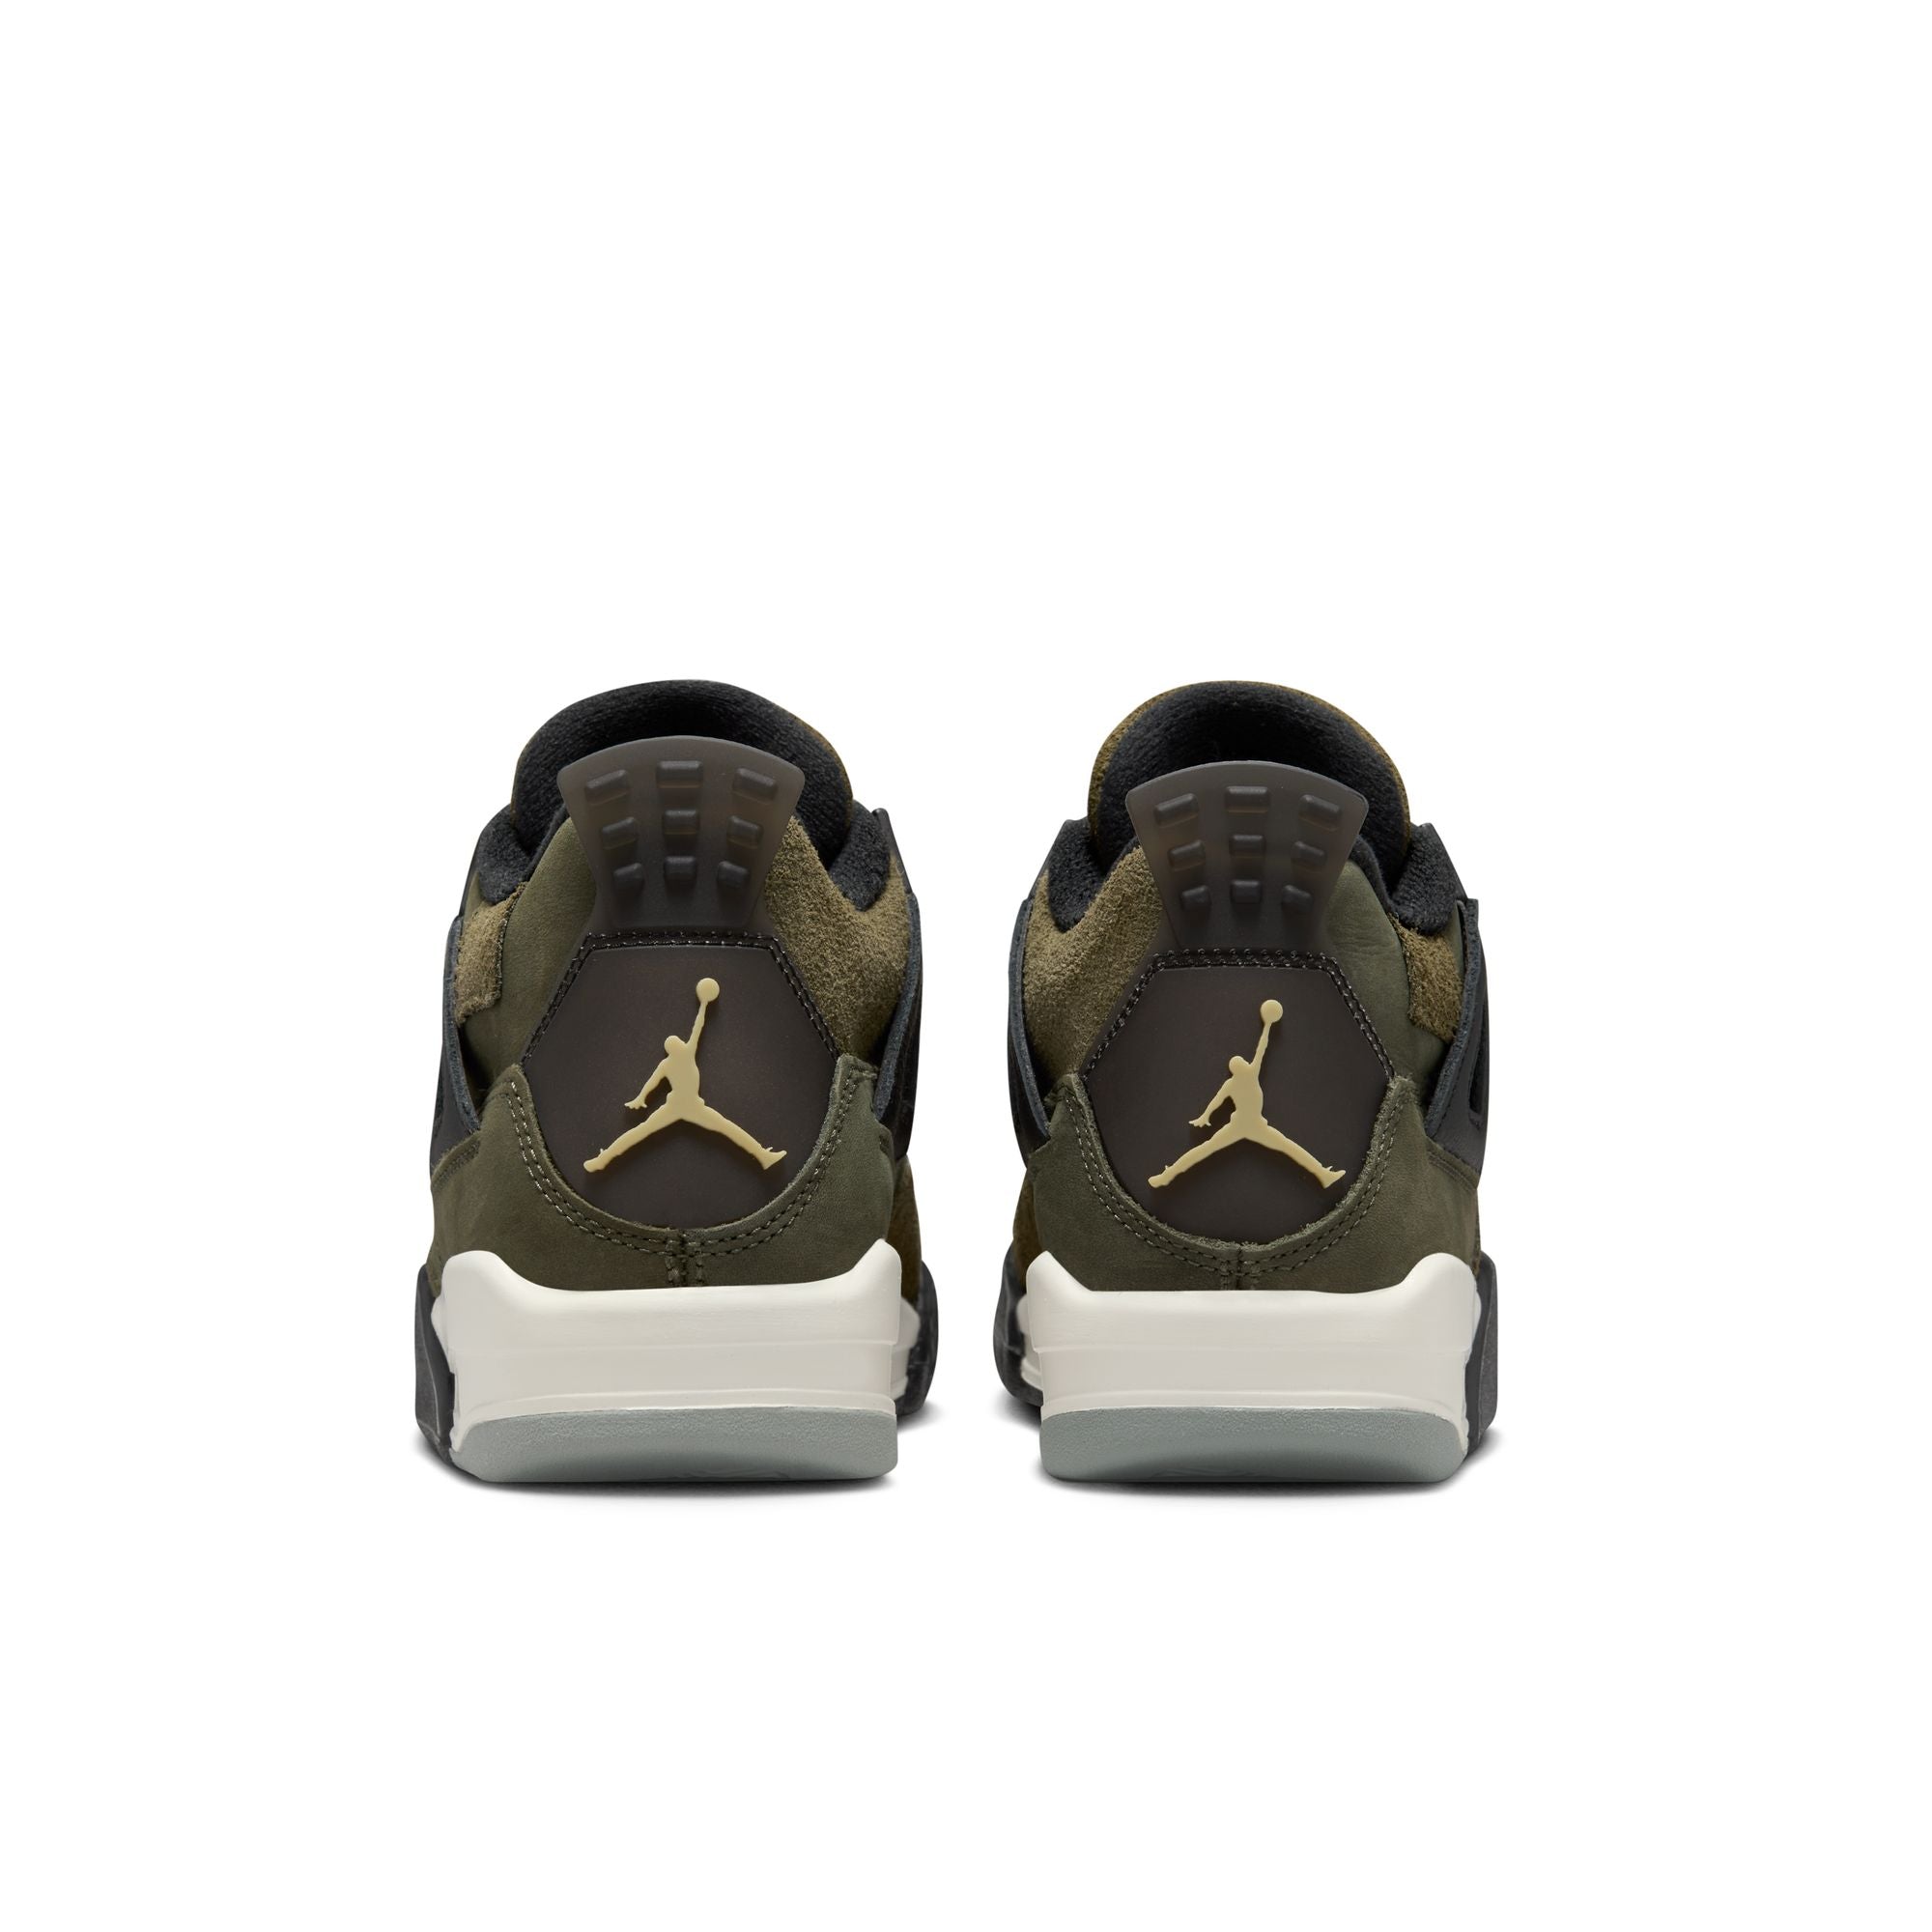 Air Jordan 4 Medium Olive: A Fresh Craft Series Entry